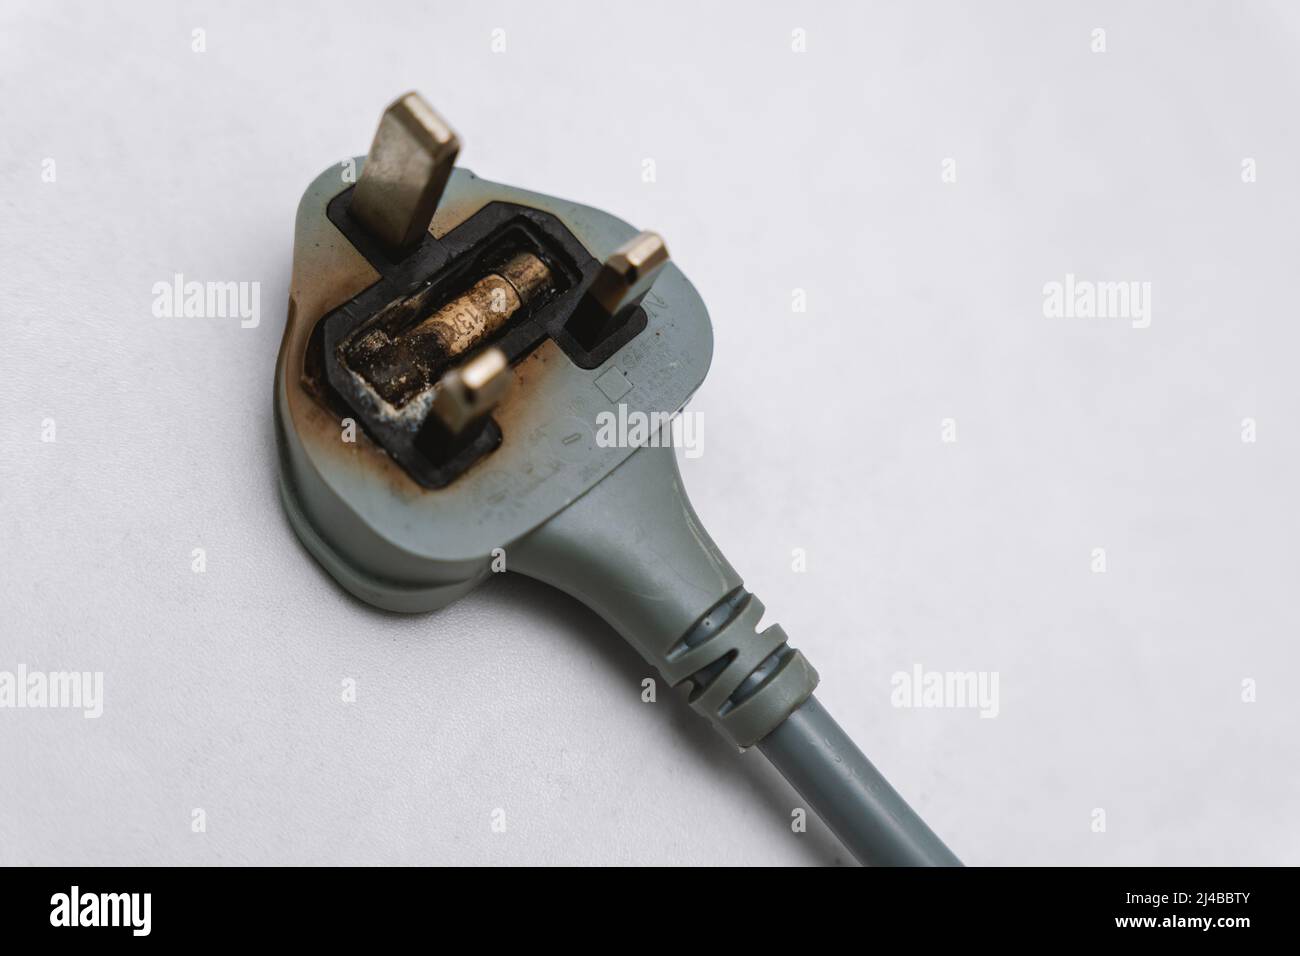 Broken and Damaged Burnt 3 Pin Plug Stock Photo